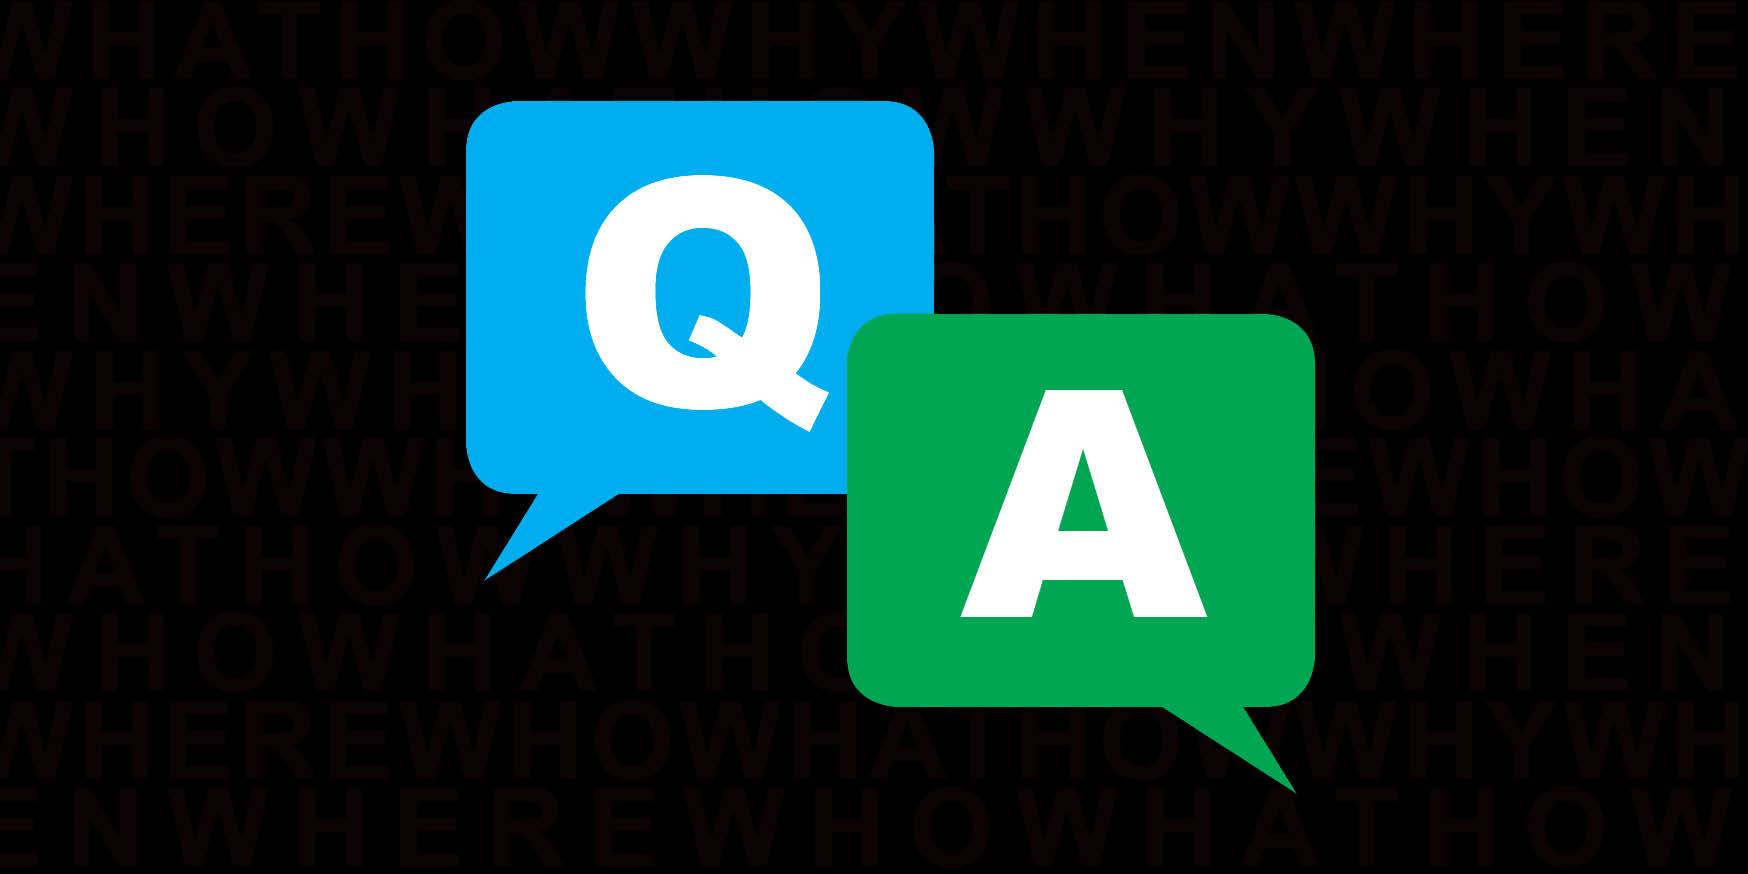 Q & A – 8:00 Service – 2018